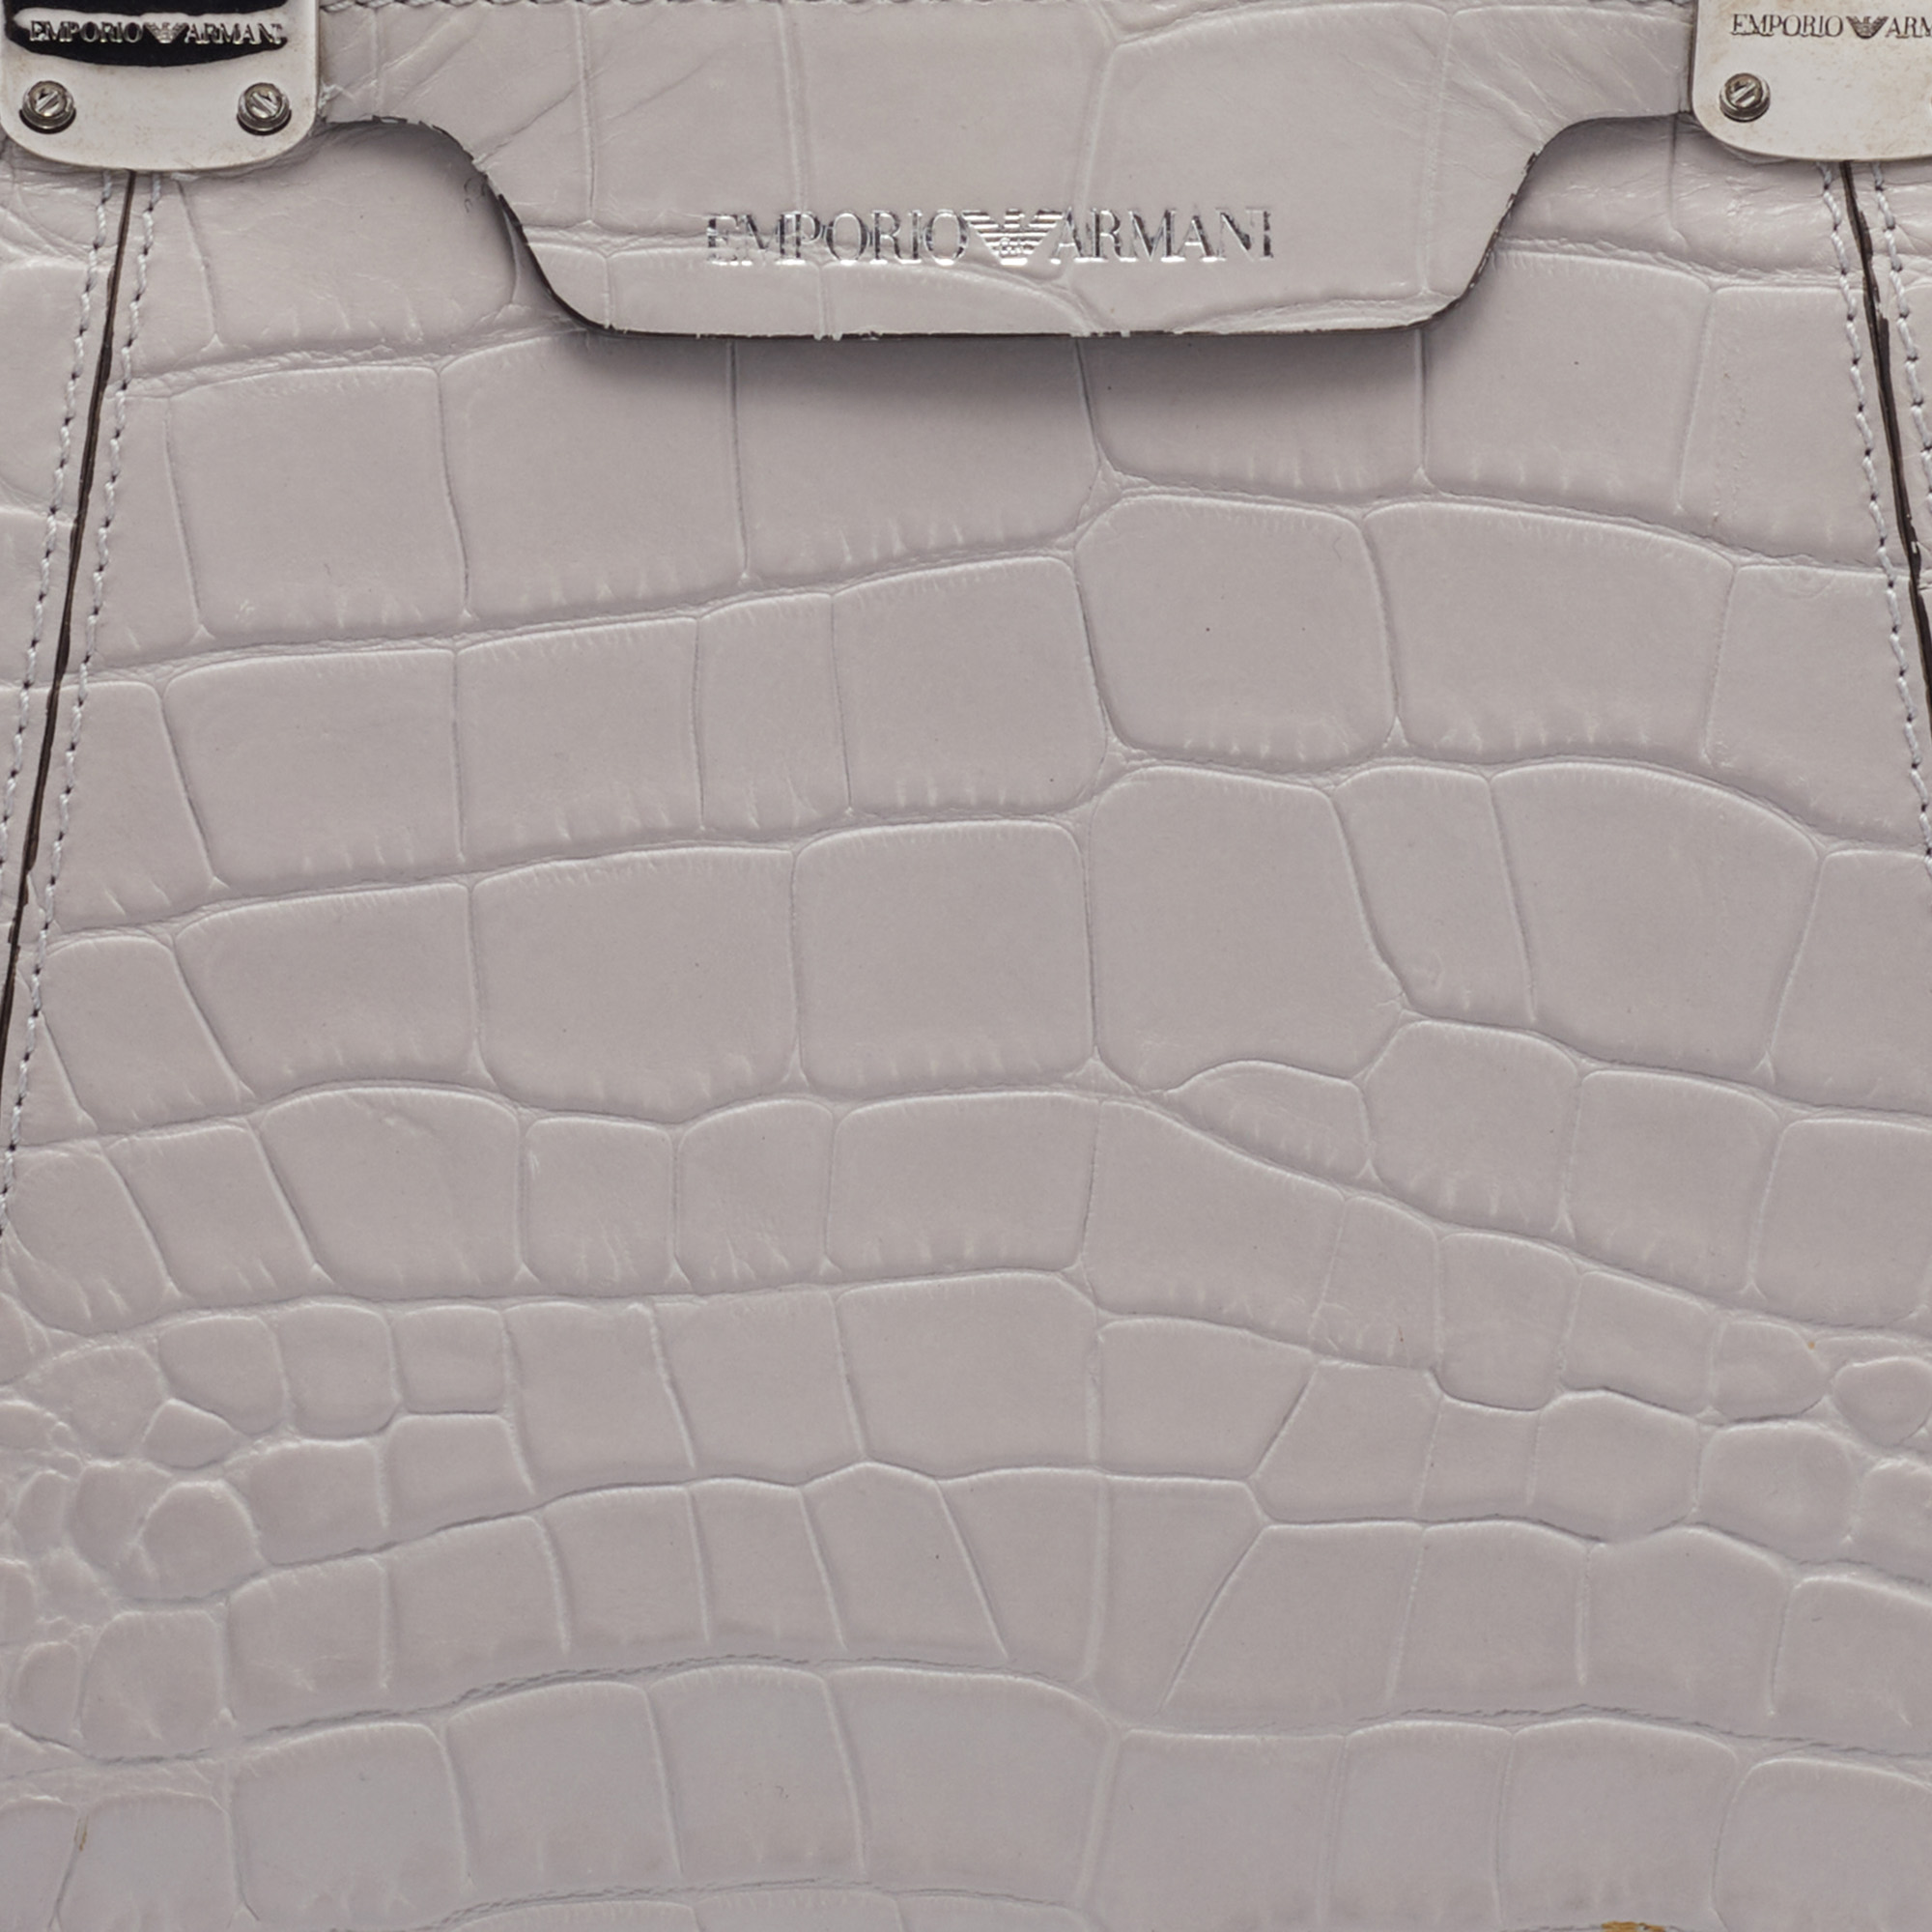 Emporio Armani Light Grey Croc Embossed Leather Satchel